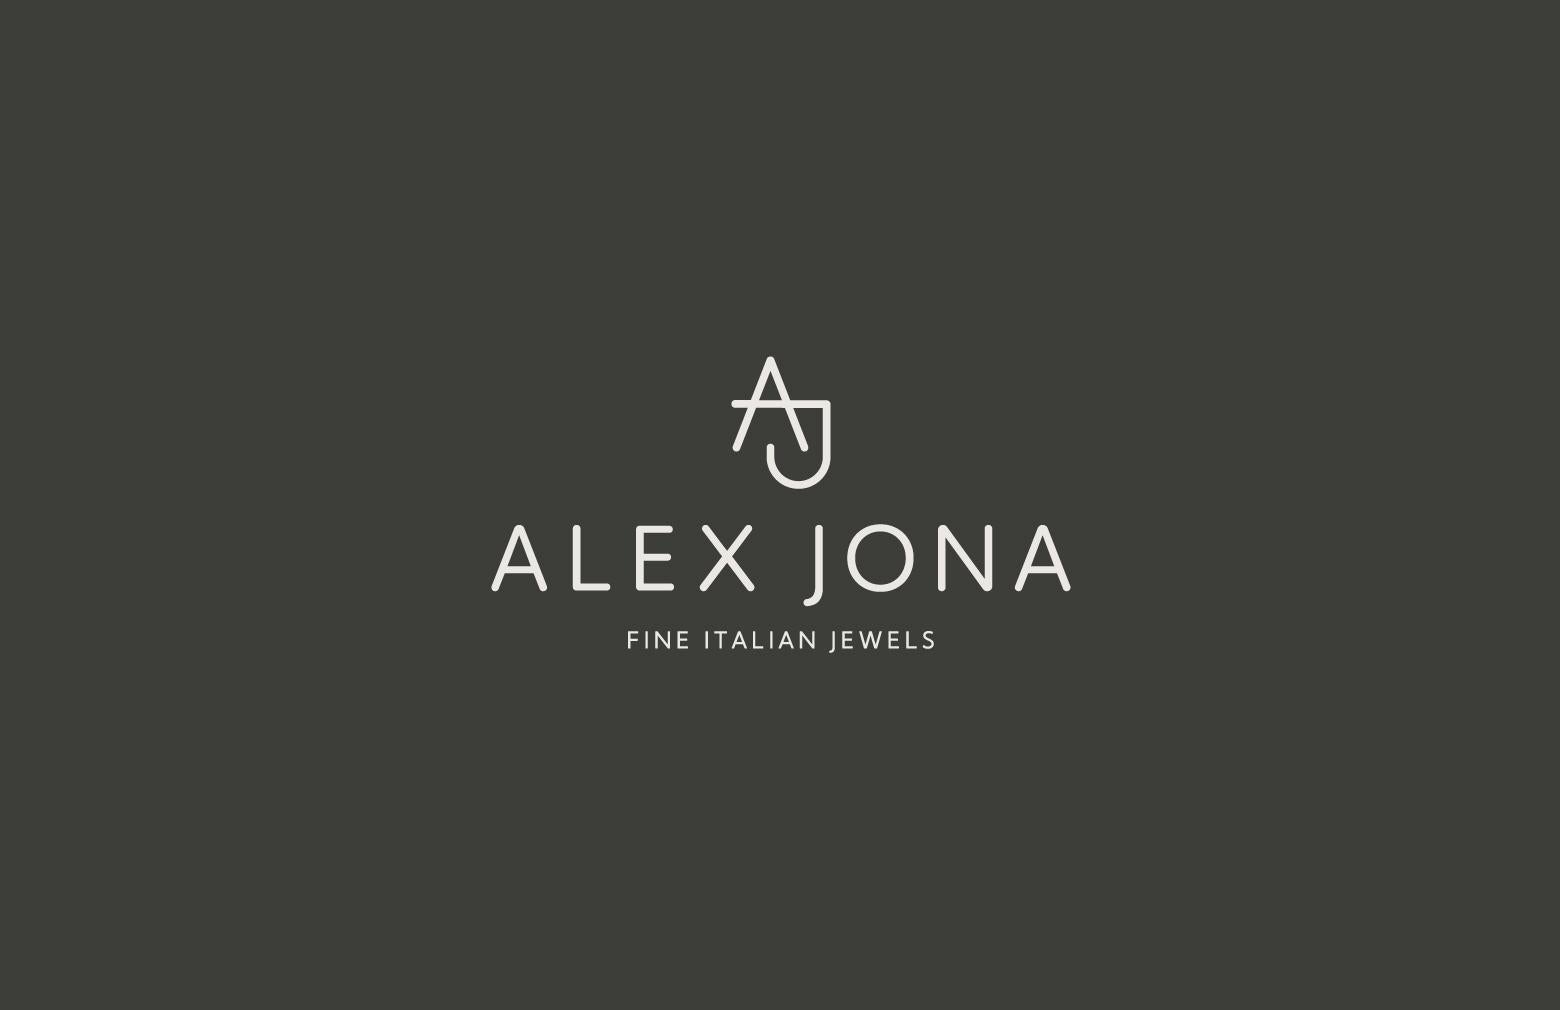 Alex Jona Blue Sapphire 18 Karat White Gold Square Earring Studs For Sale 5